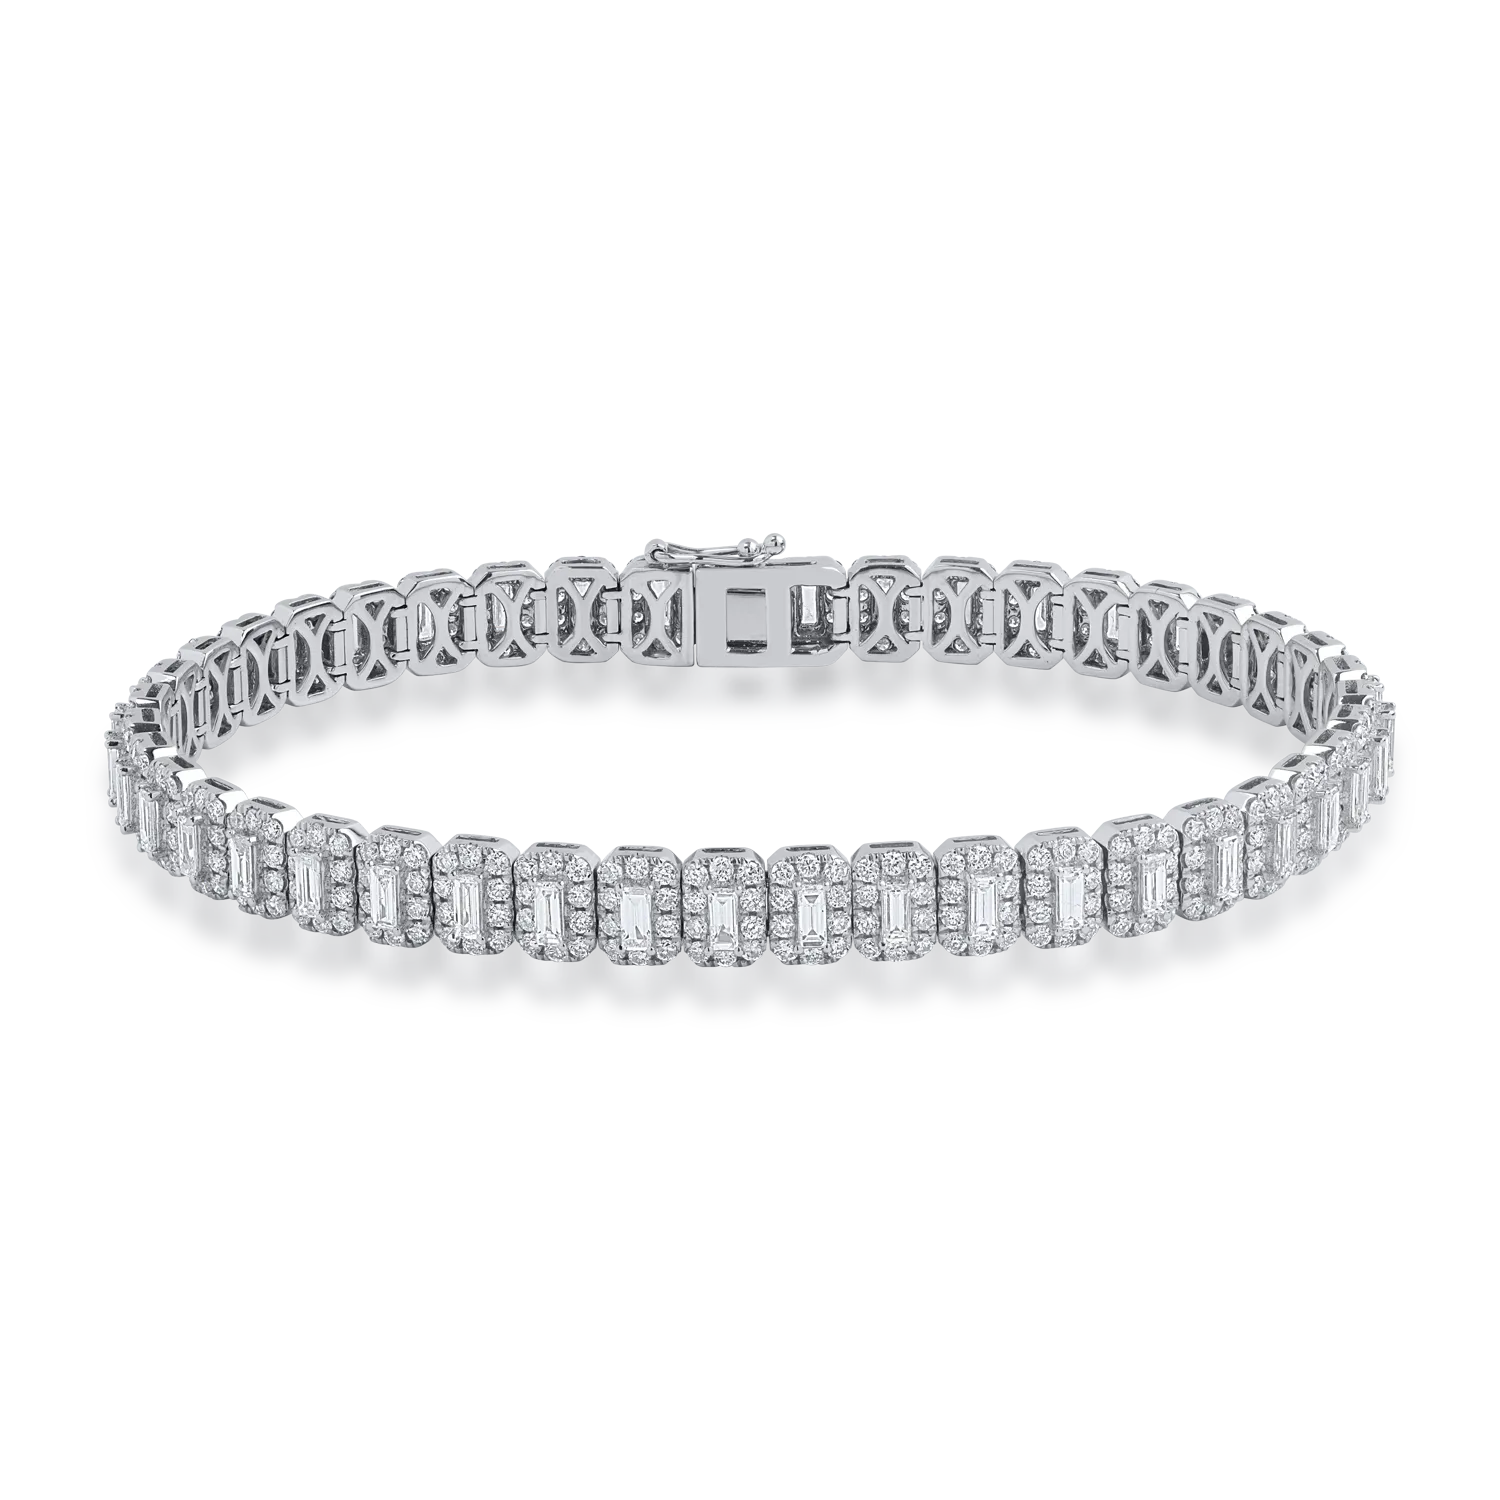 White gold tennis bracelet with 5.12ct diamonds